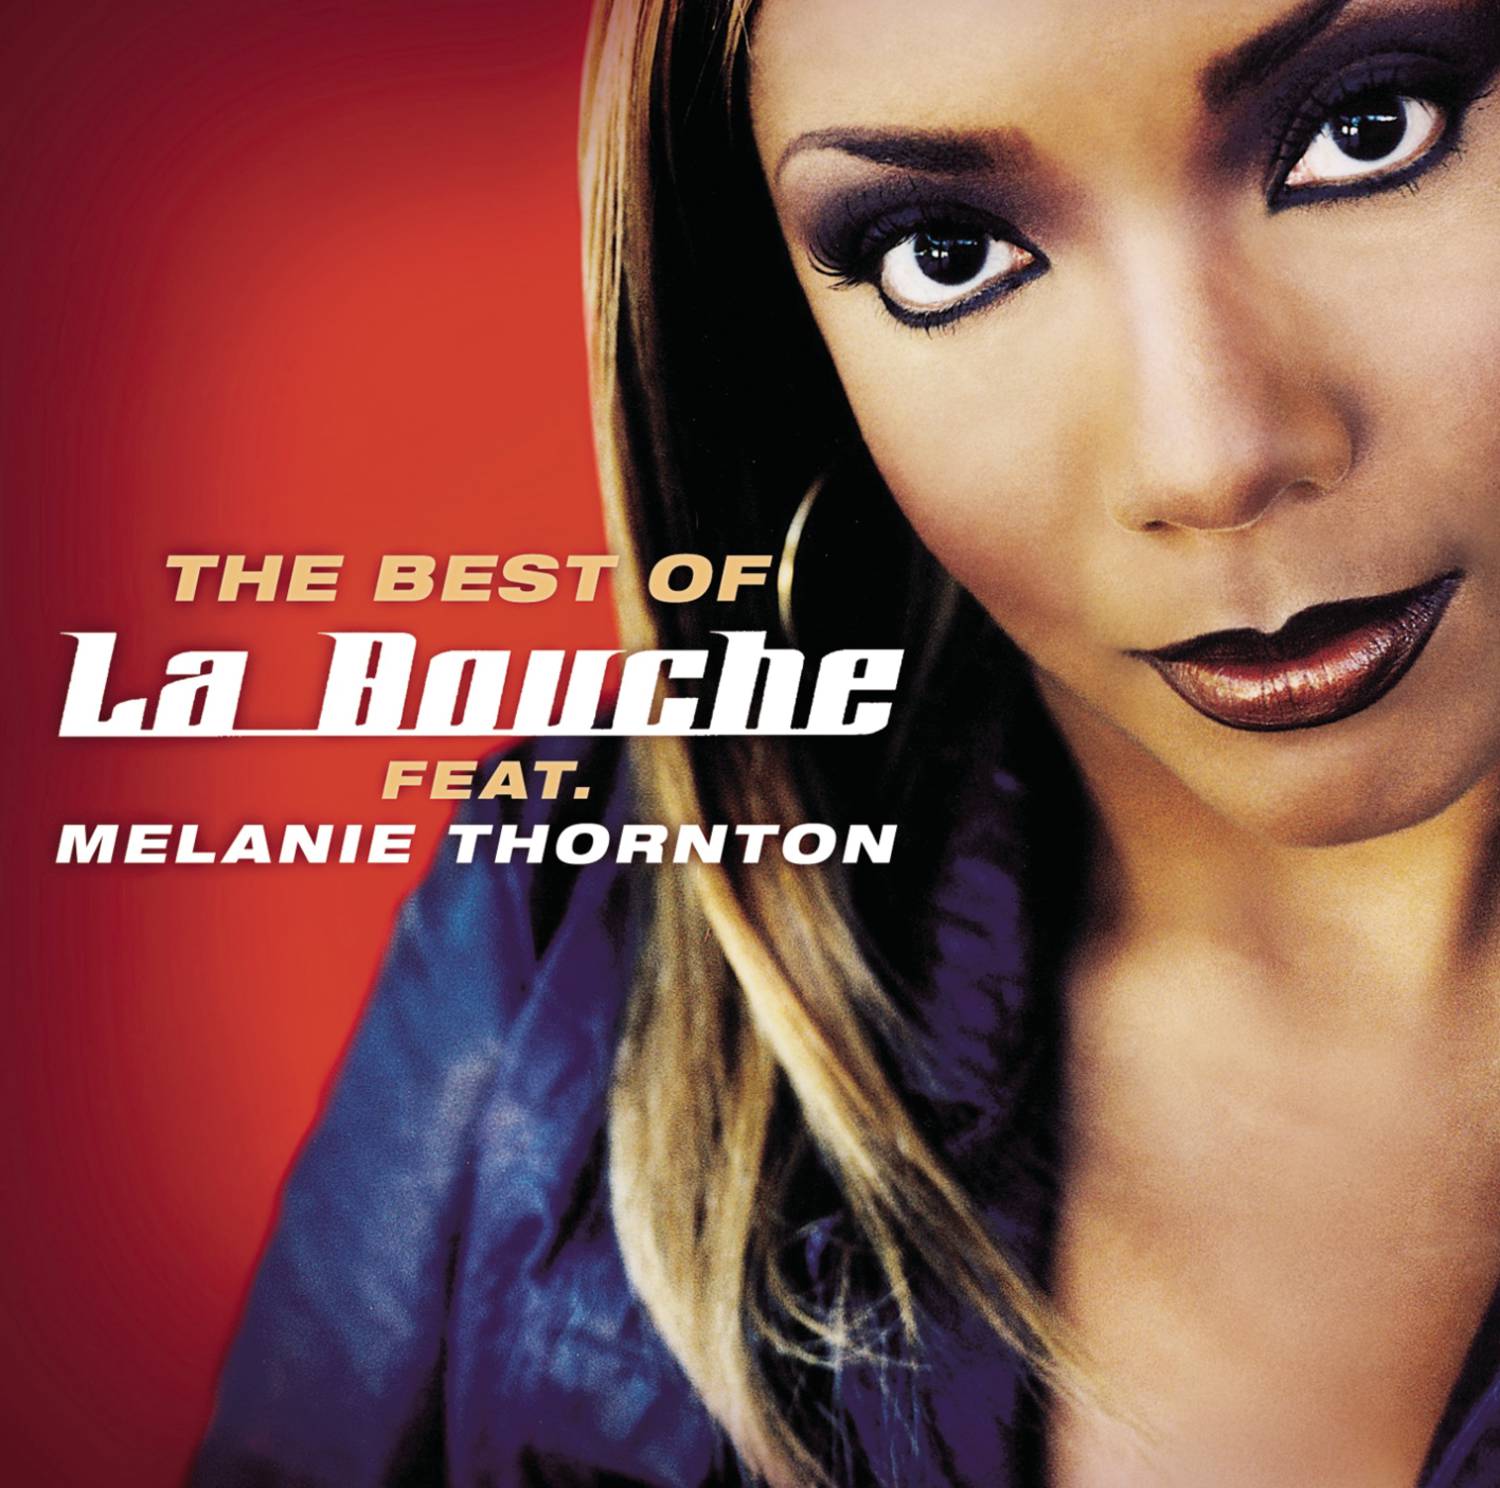 Best Of La Bouche feat. Melanie Thornton